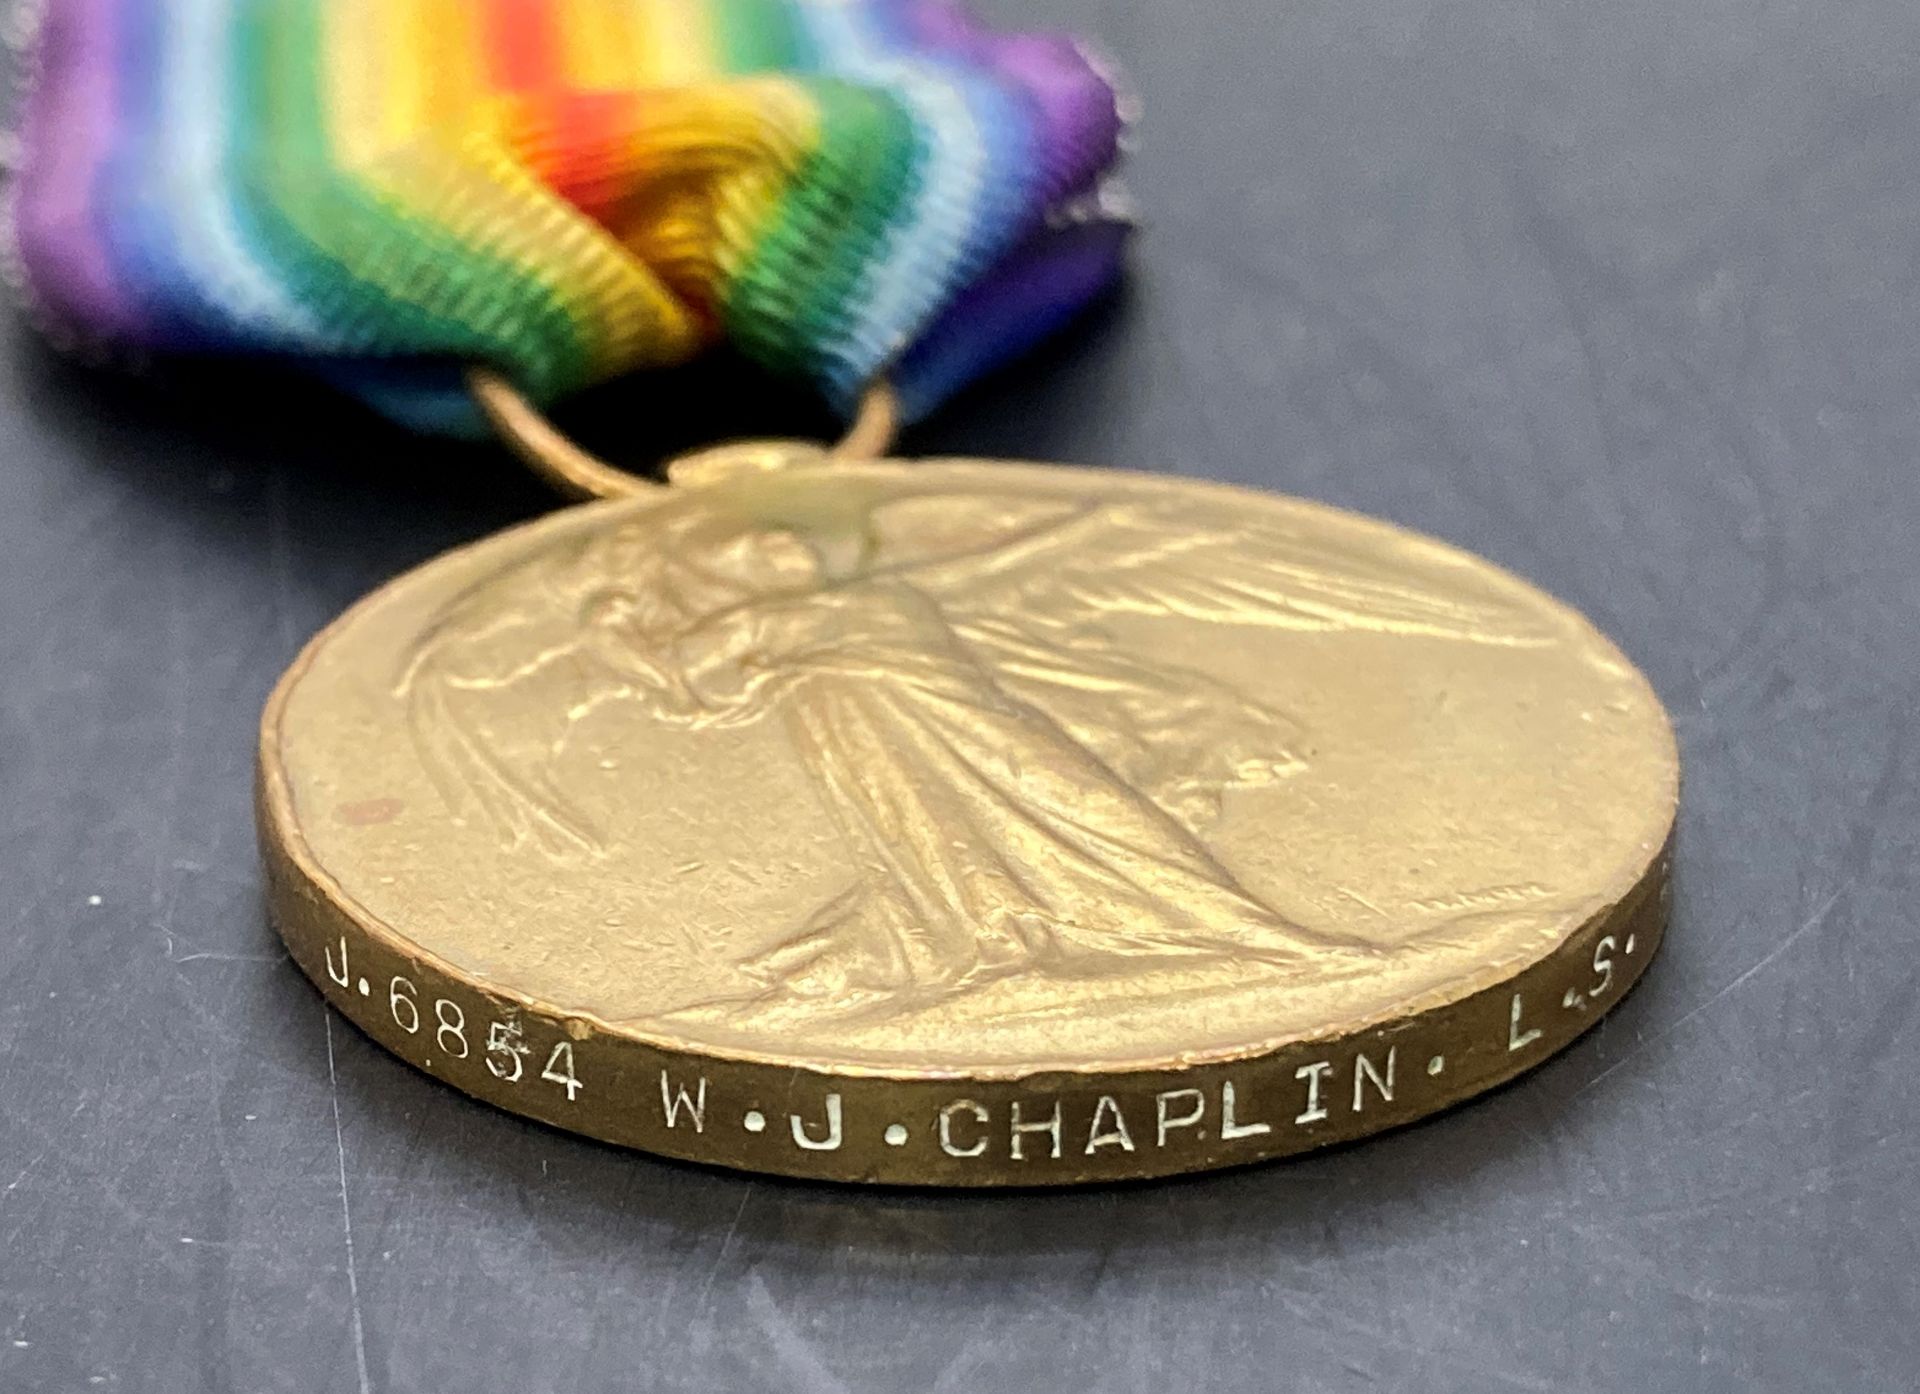 Three First World War Medals - 1914 Star, - Image 4 of 5